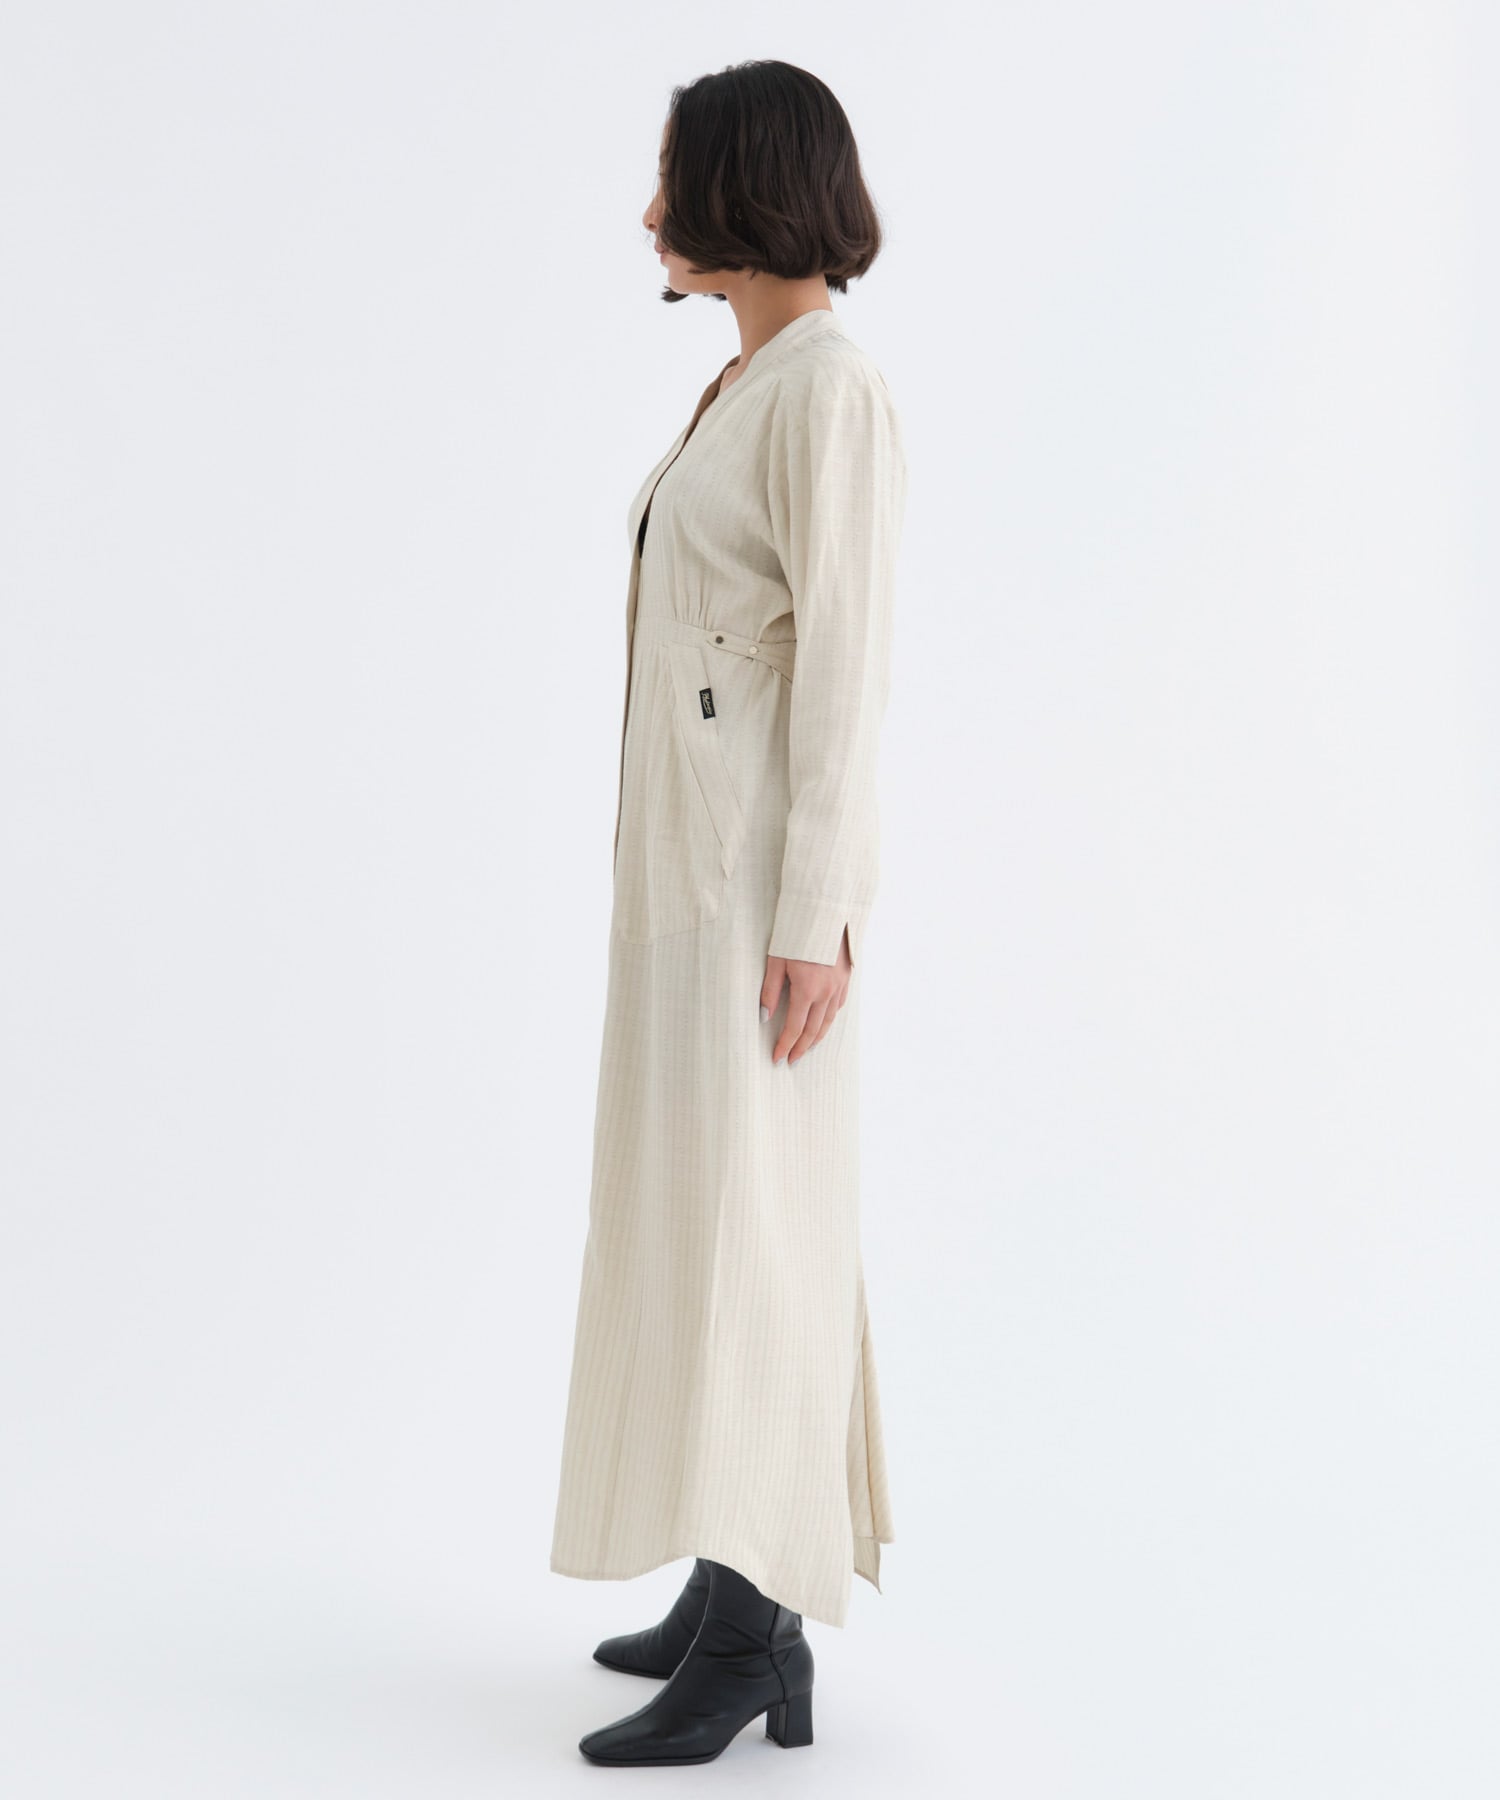 BOUTIQUE TOKYO DRESS コットン トレンチコート素材